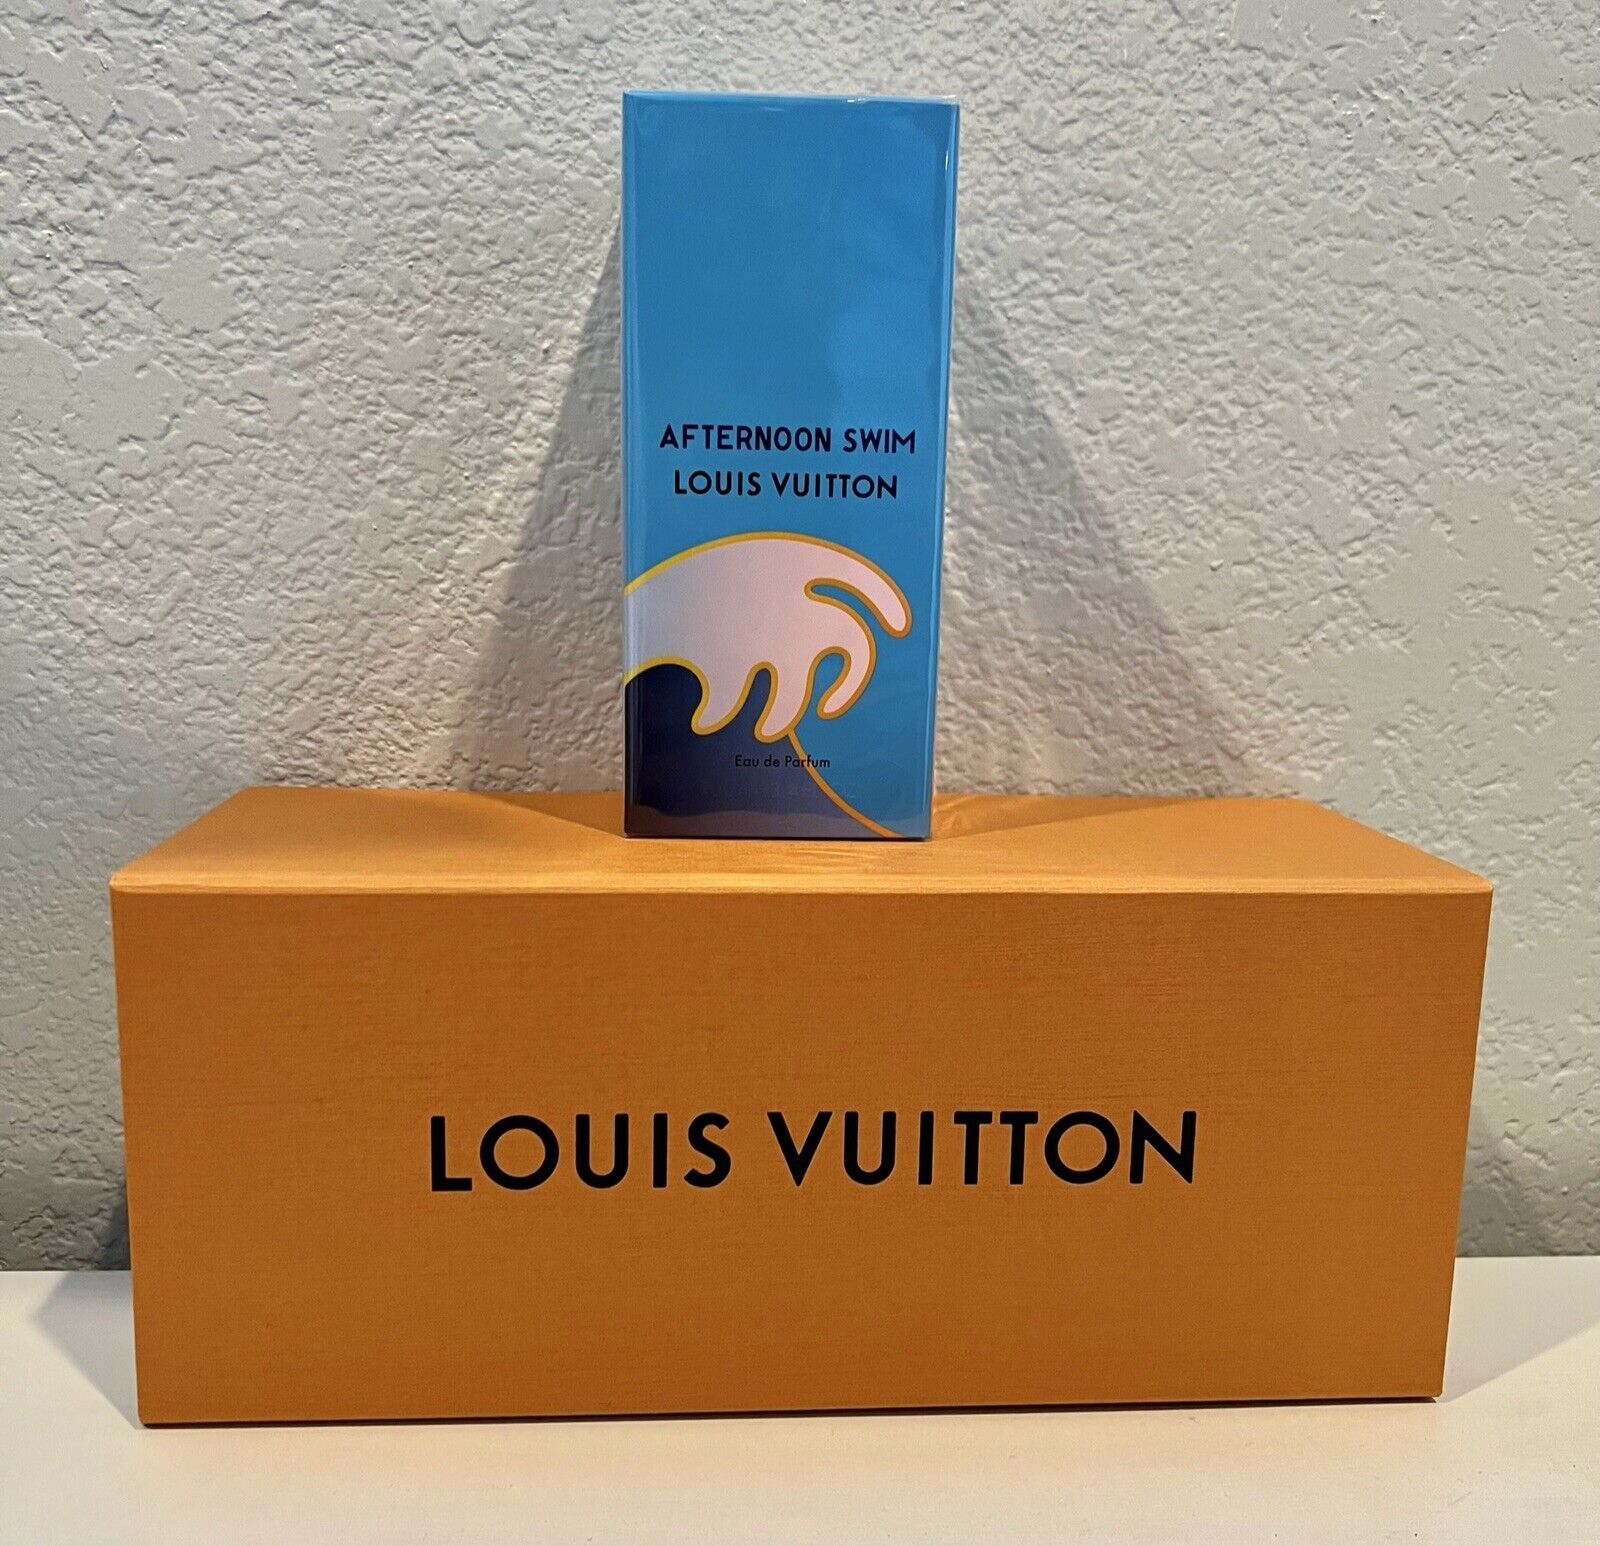 Buy Louis Vuitton After Noon Swim EDP for Women - 100ml in Pakistan